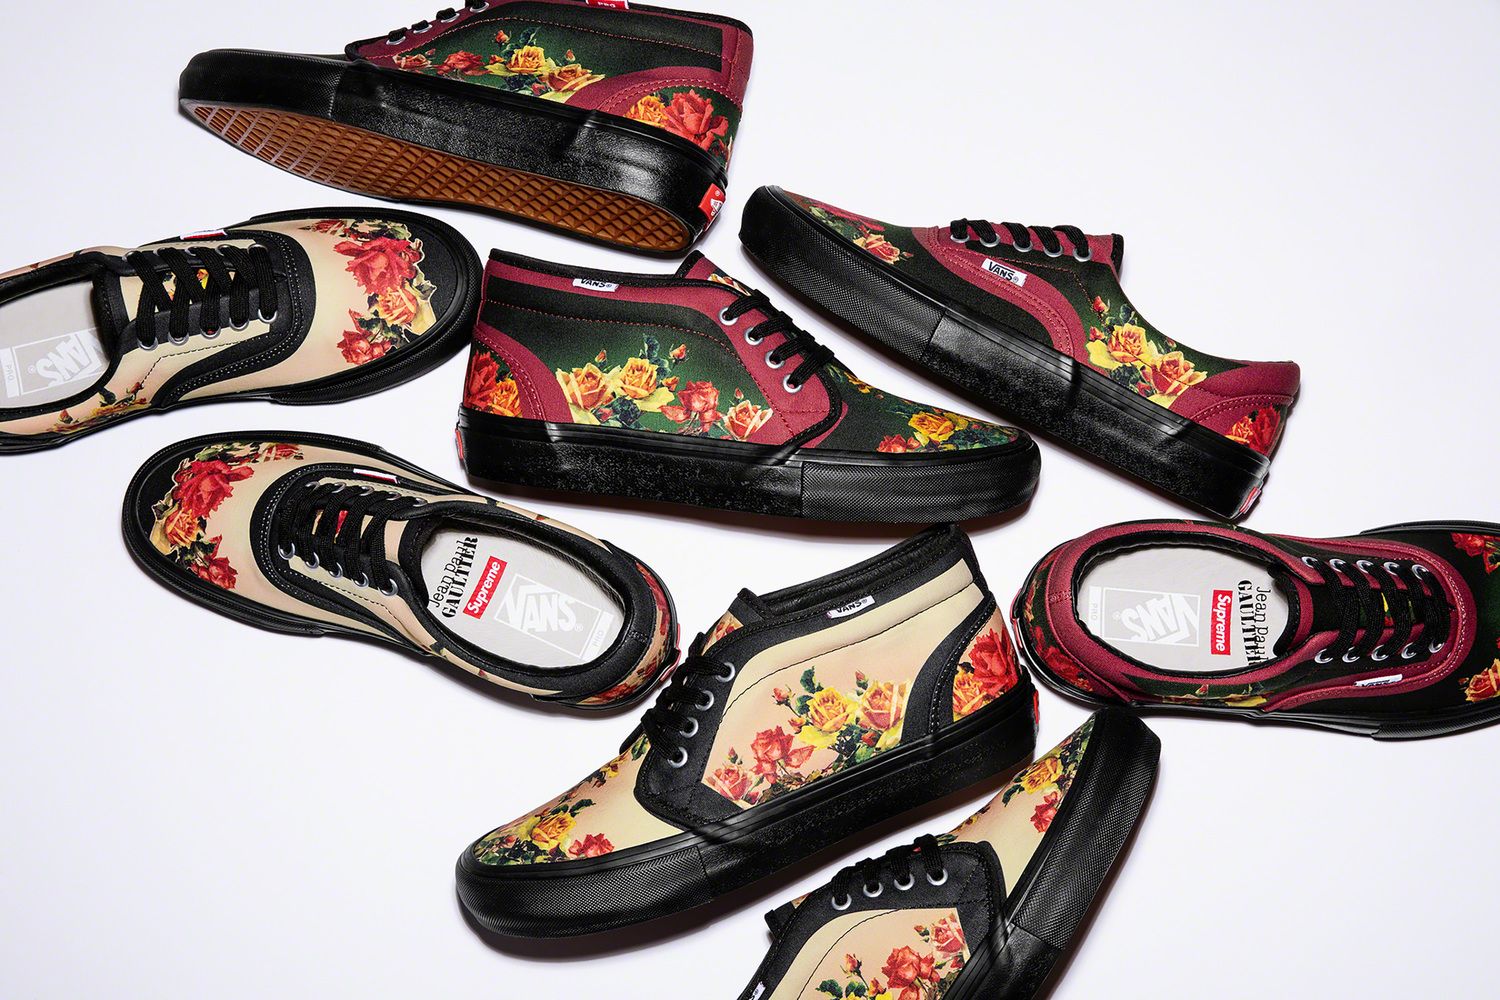 abort Savant velfærd Supreme x Jean Paul Gaultier Collaboration Vans Era and Chukka Sneakers